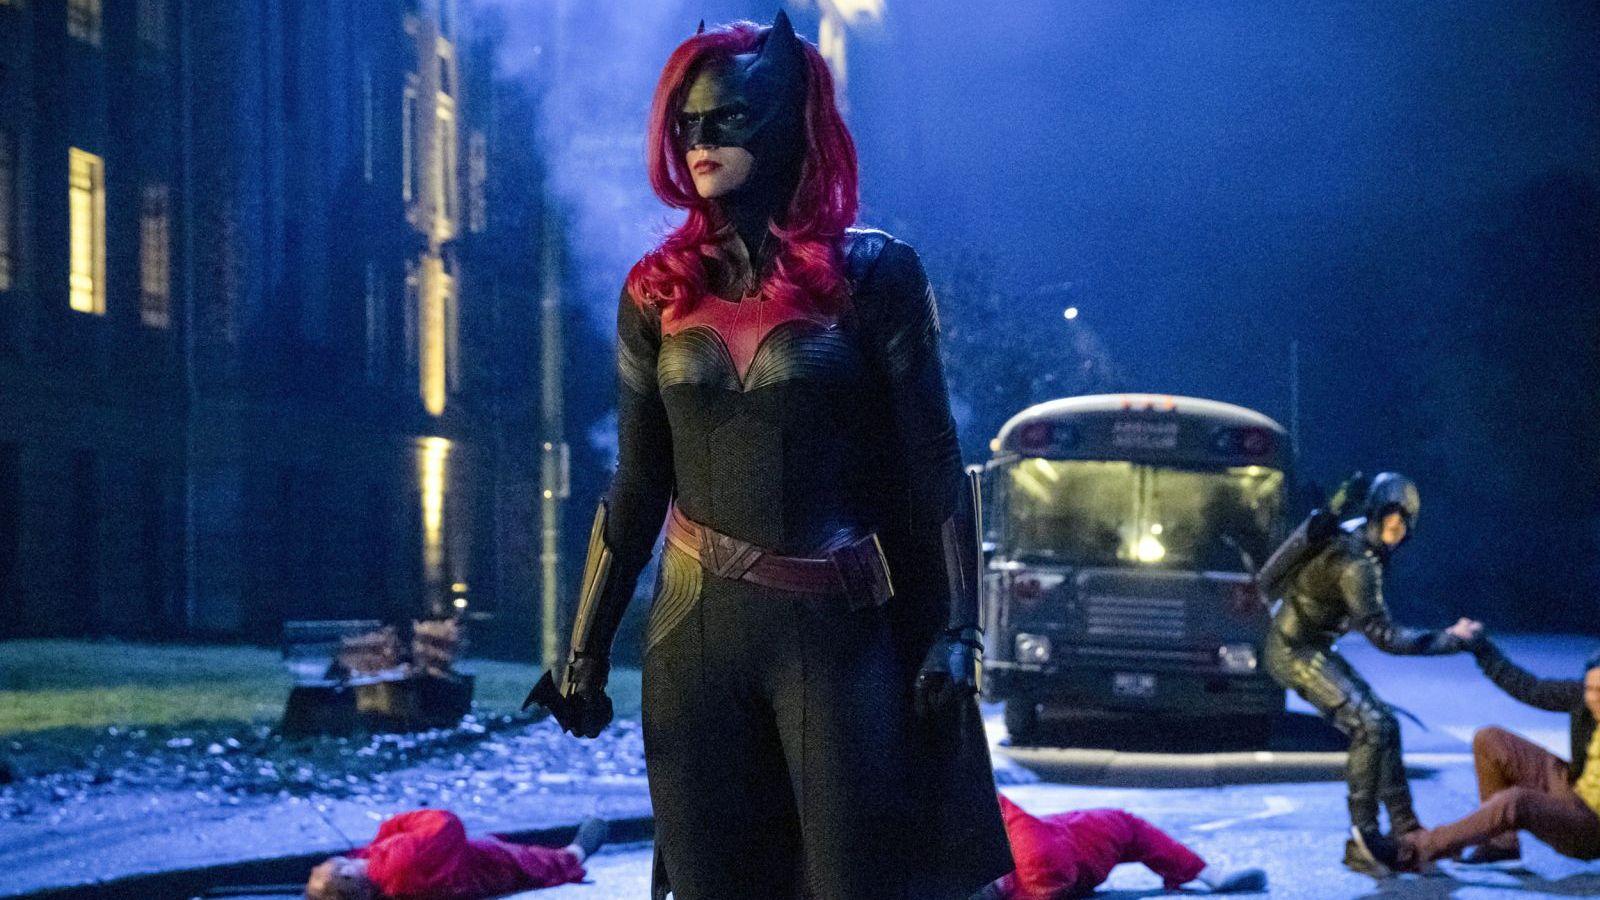 How to Watch 'Batwoman' Online Stream Season 1 Episodes